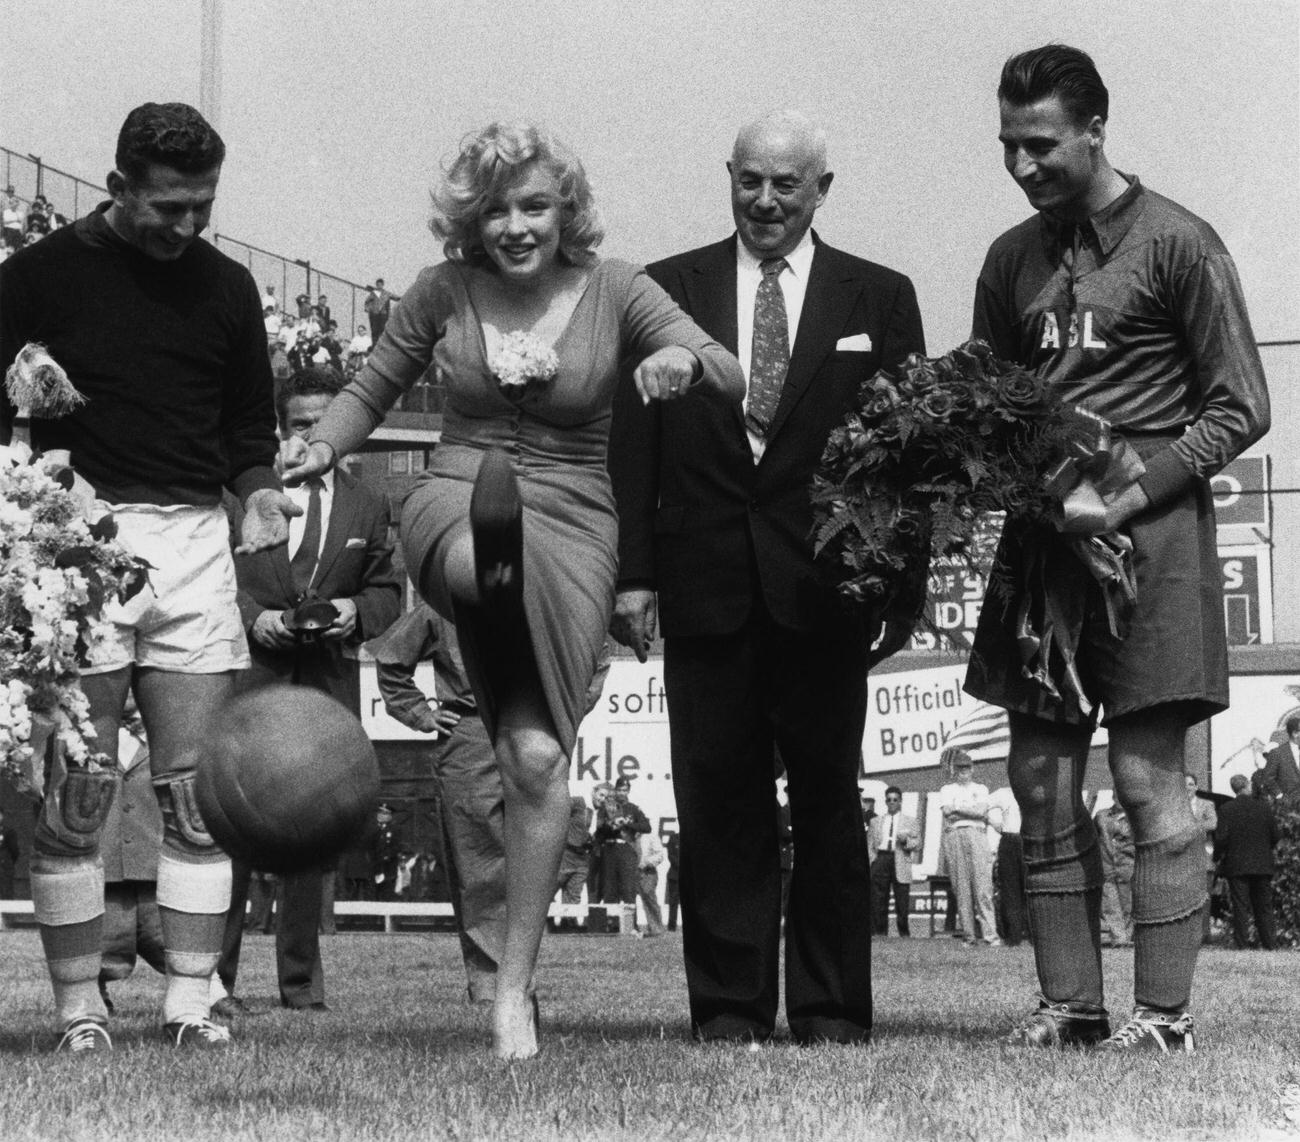 Marilyn Monroe Kicks Soccer Ball With Israeli Goalkeeper At Ebbets Field, 1957